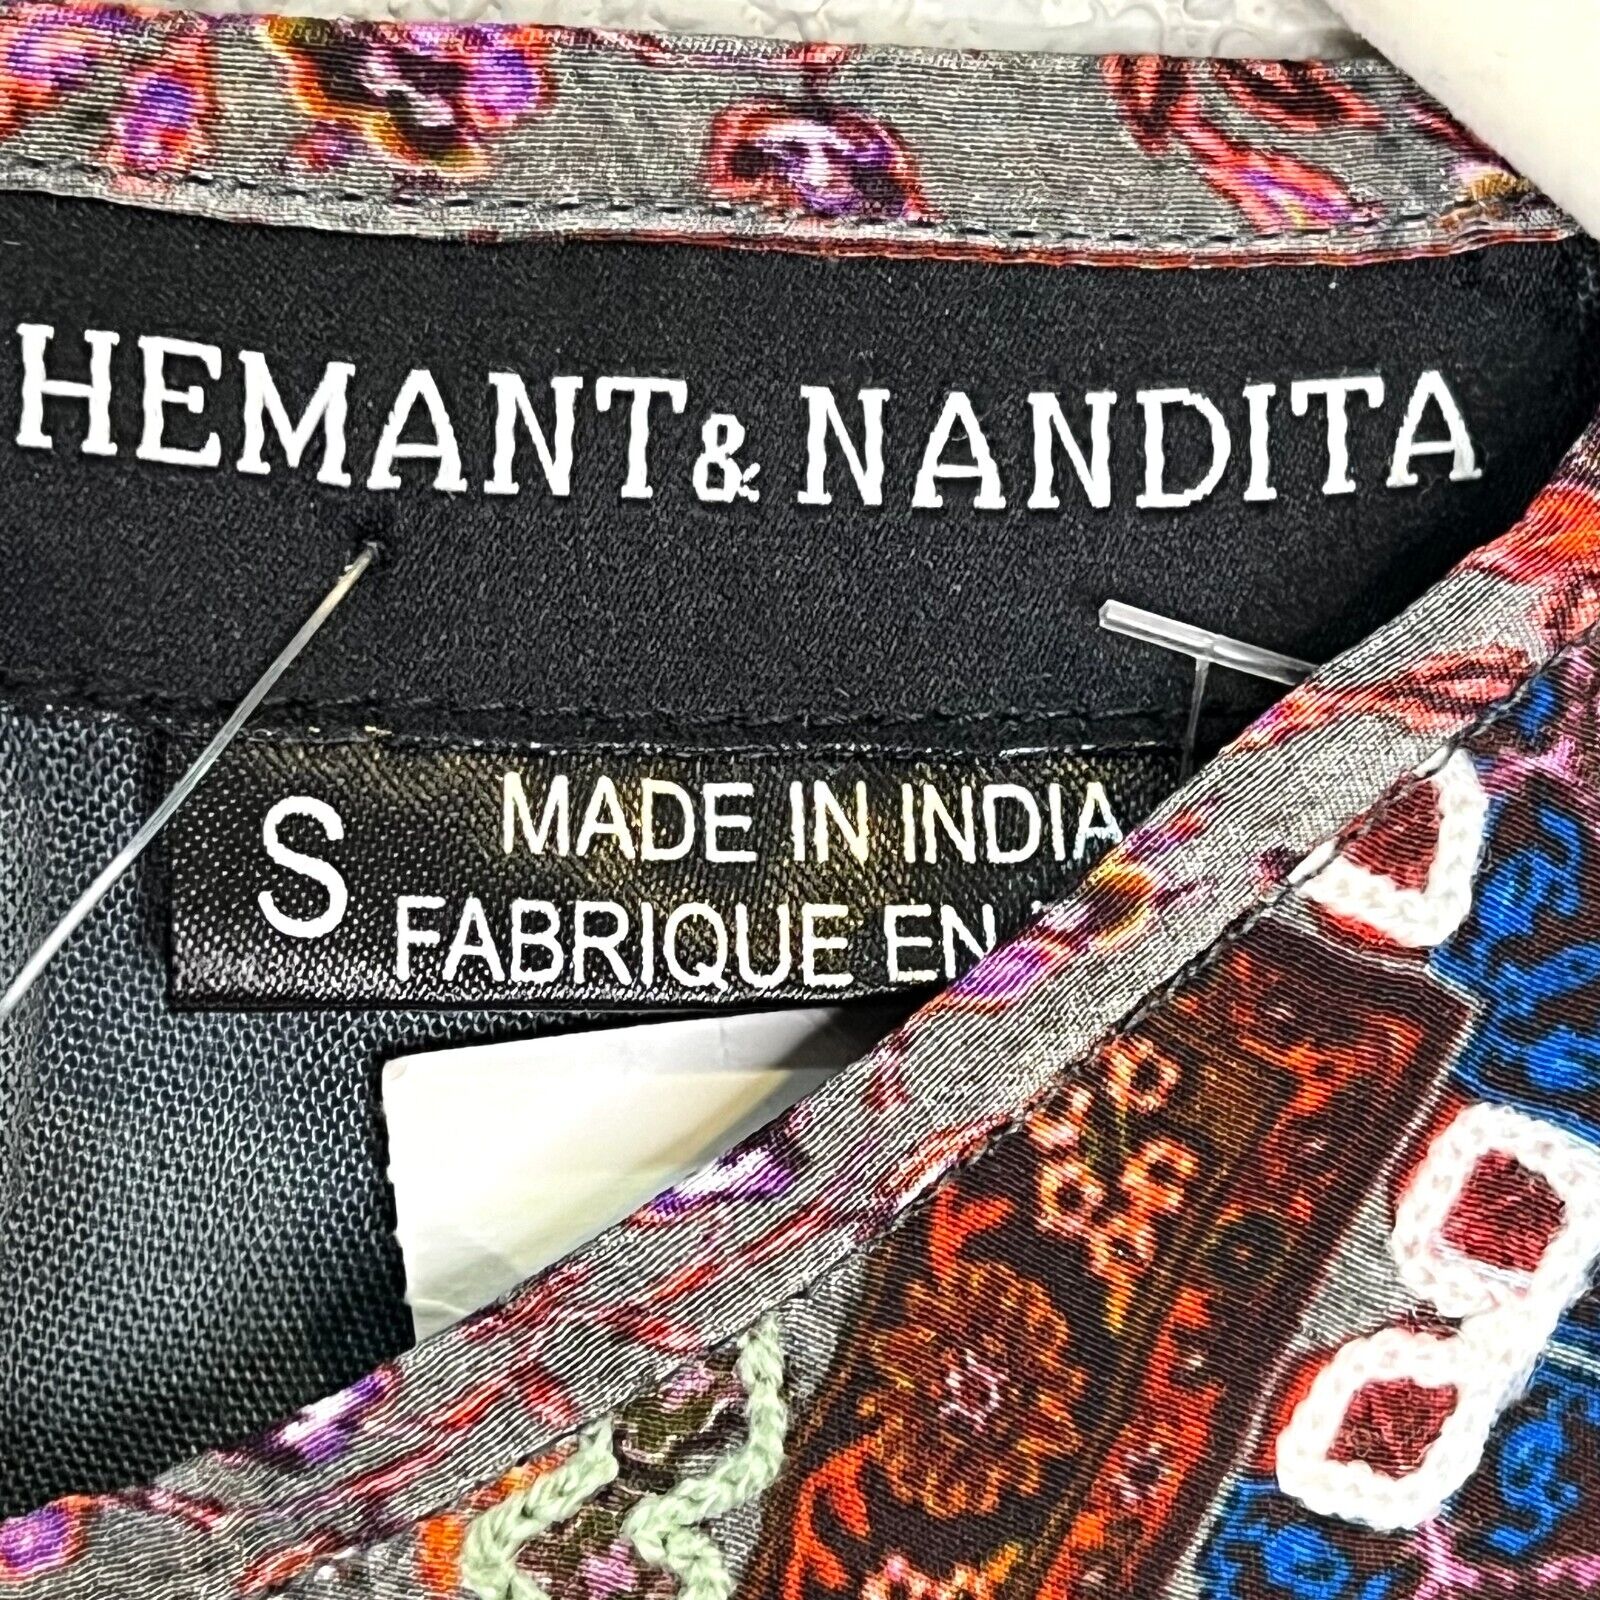 HEMANTA & NANDITA Silk Paisley Print Crop Top Size Small NEW $176